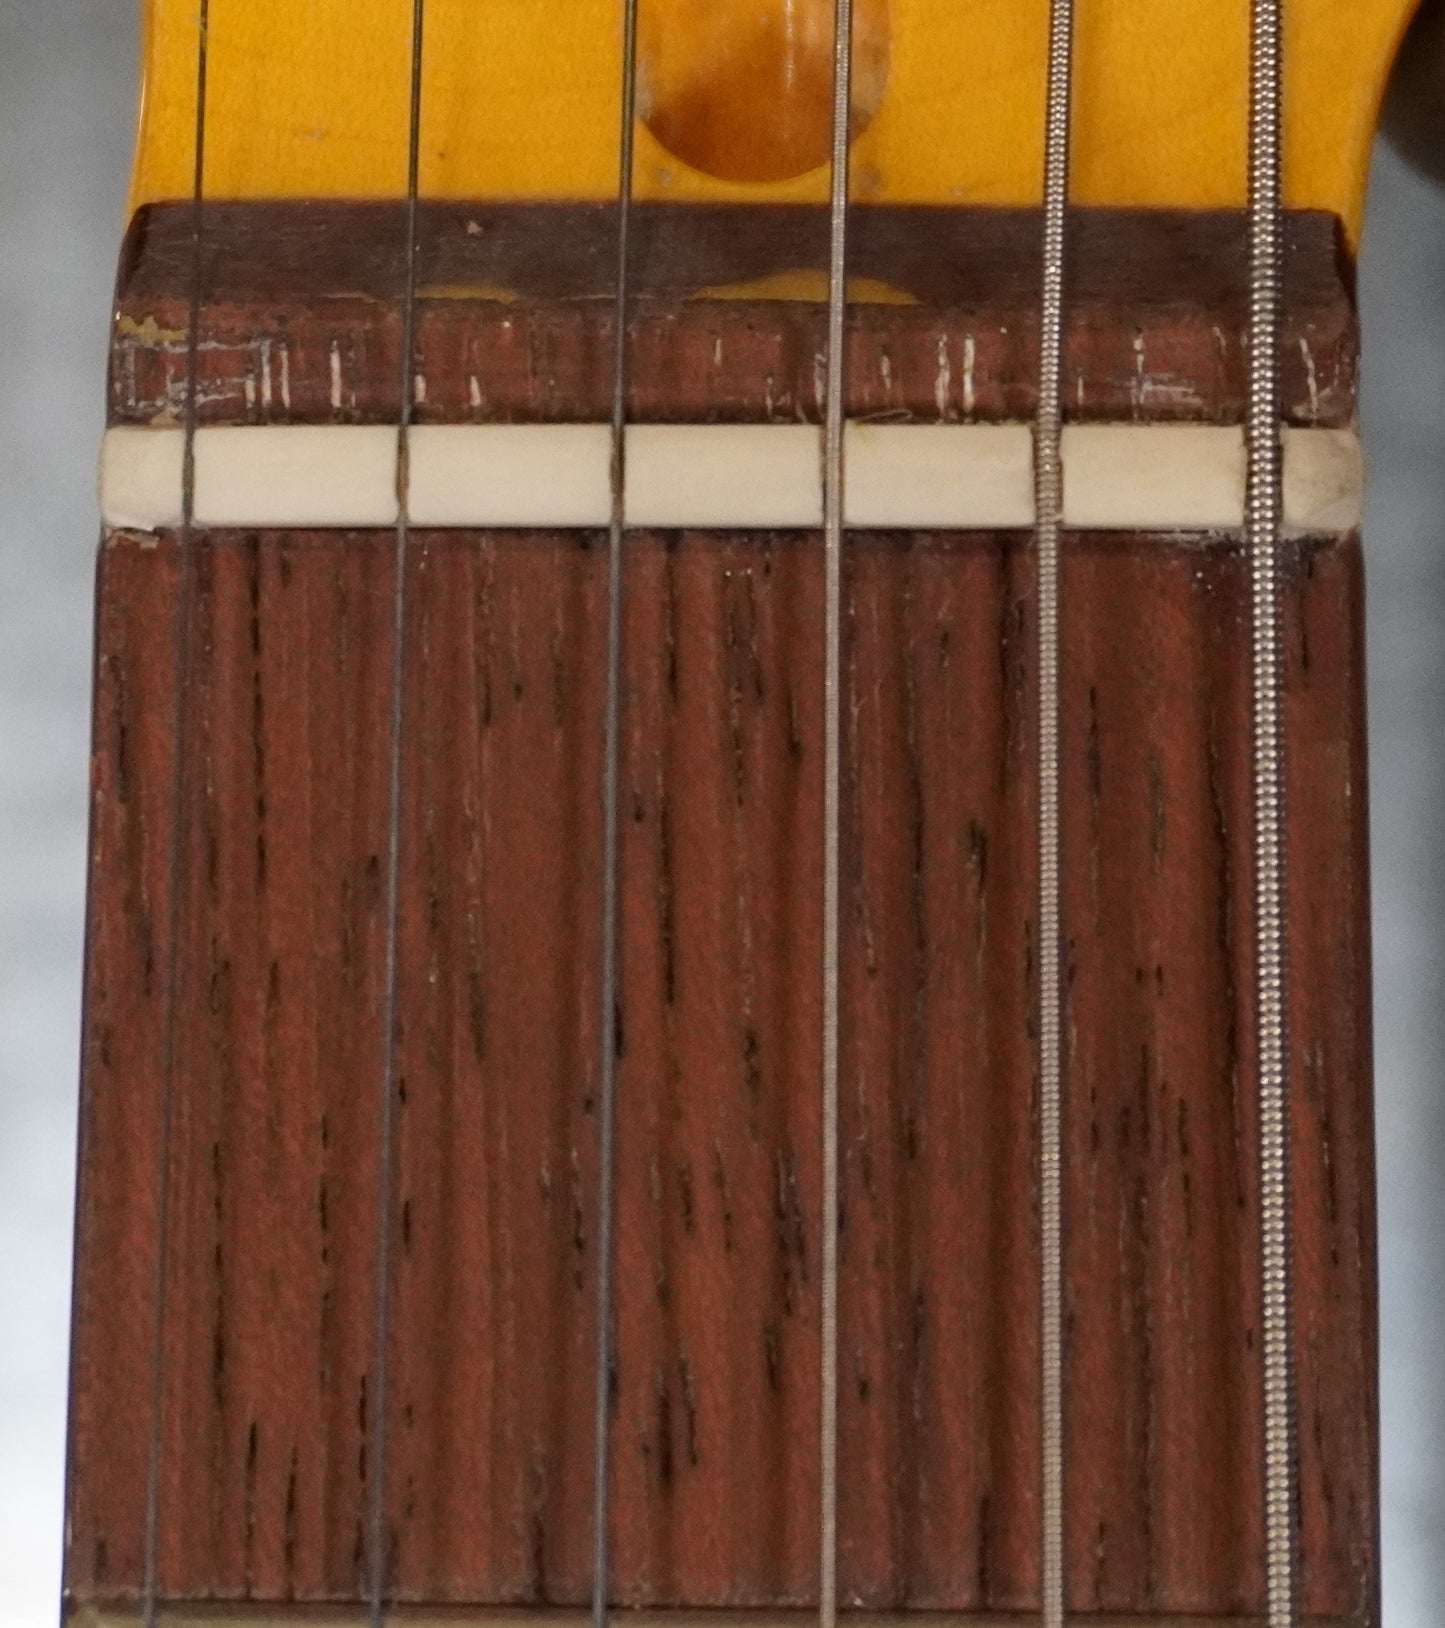 G&L Tribute Legacy 3-Tone Sunburst Guitar Left Hand Sassafras #5425 Used